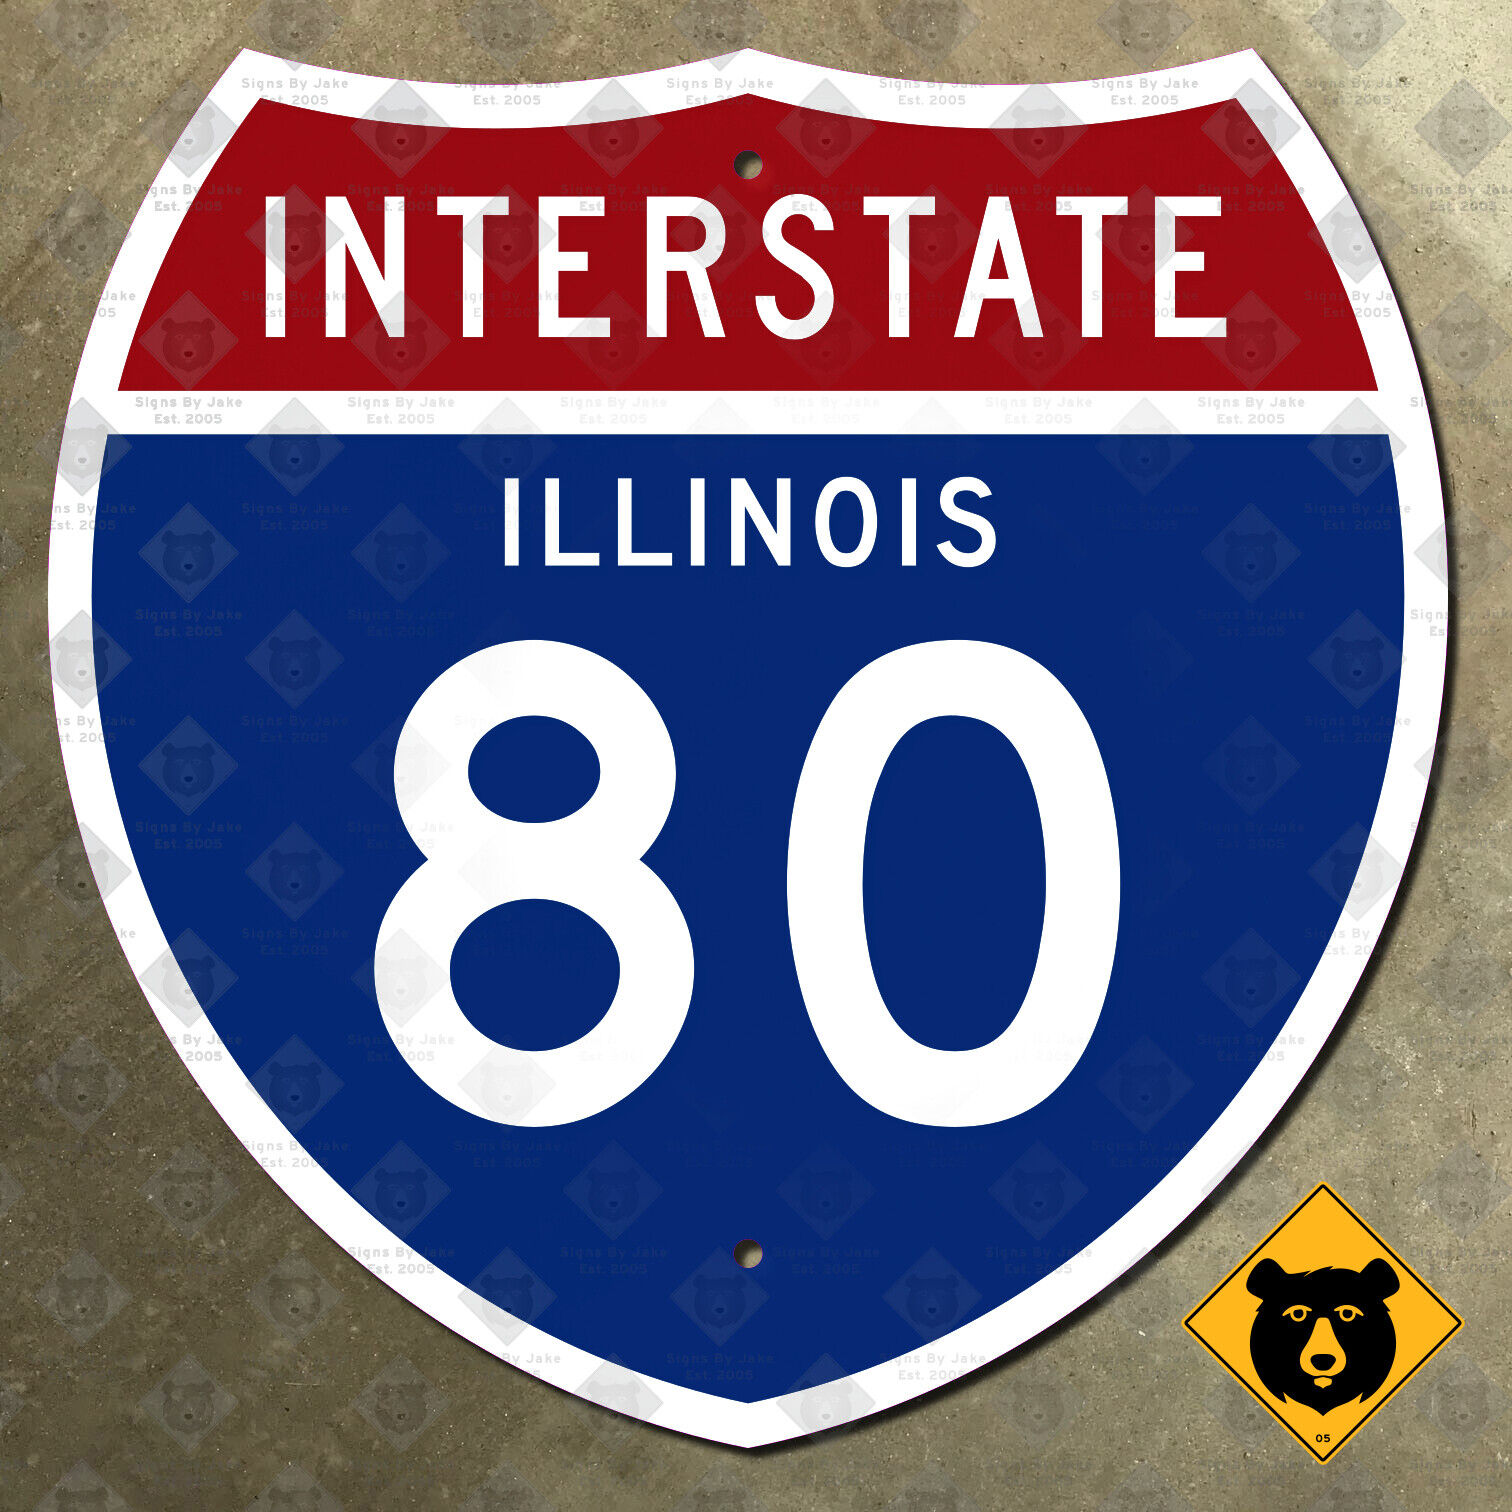 Illinois Interstate 80 route marker highway sign Lansing Joliet Moline 12x12